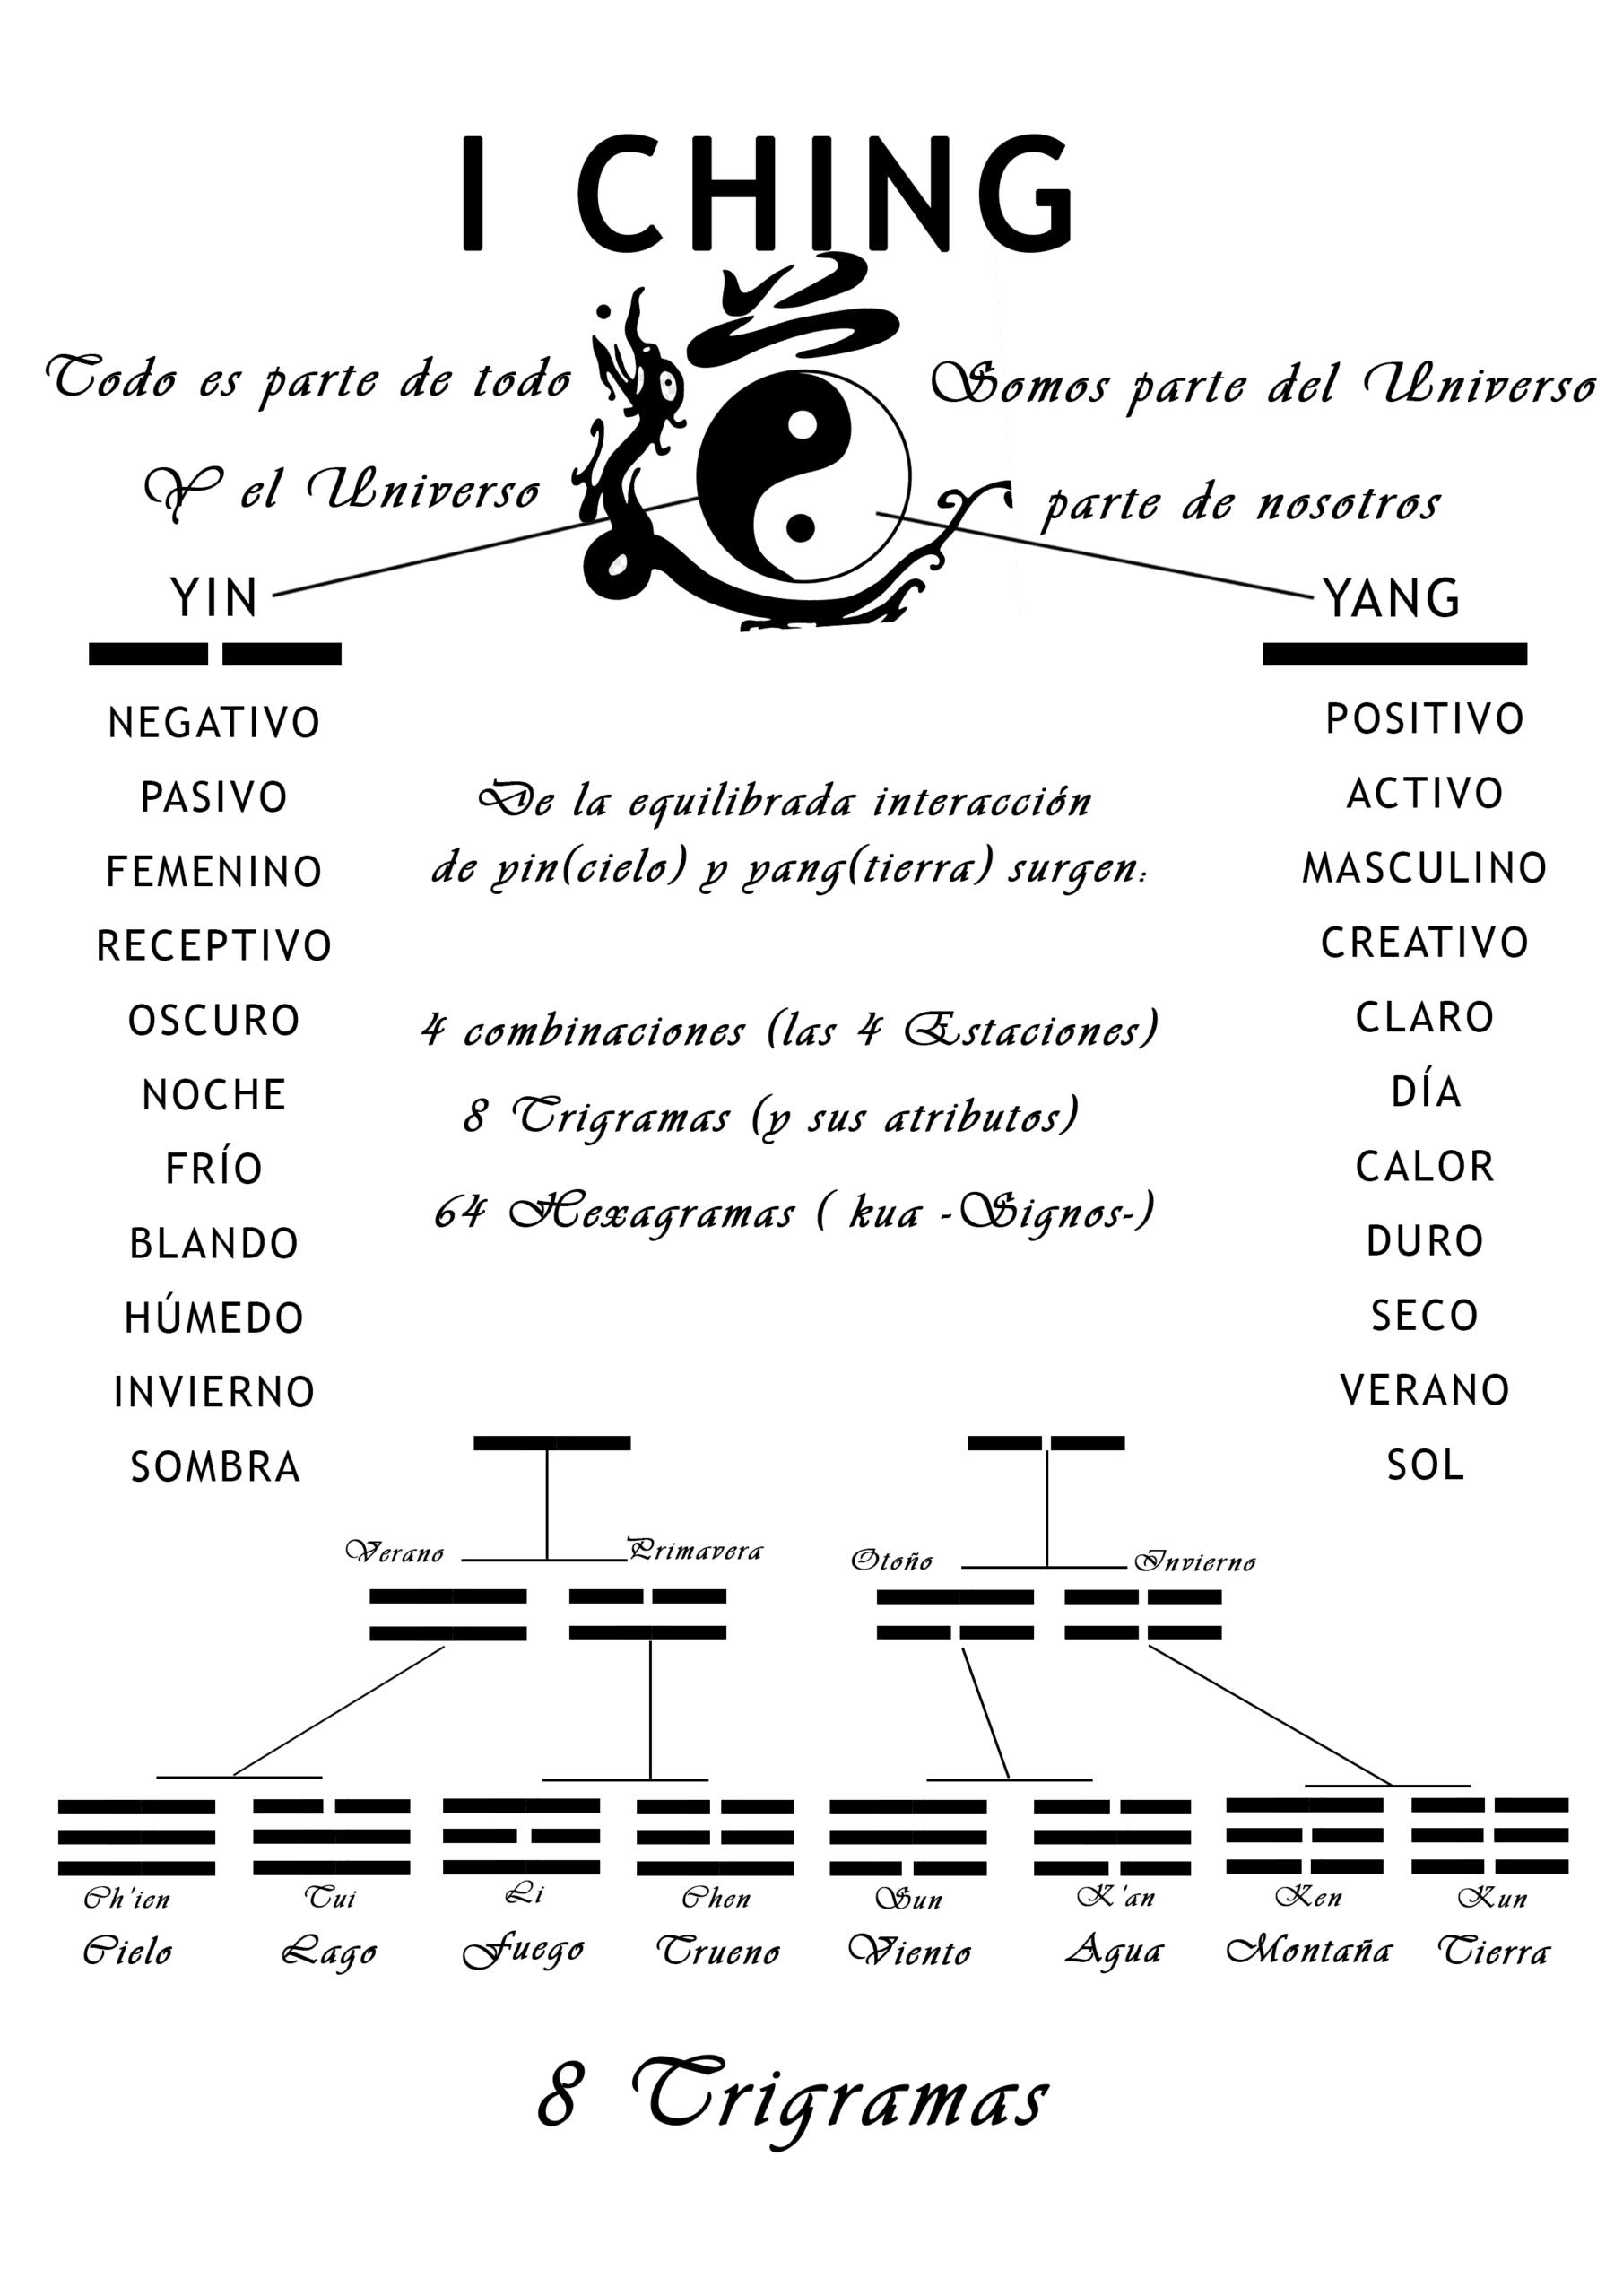 I Ching - HEXAGRAMA nº 1 - chien el primer hexagrama del Libro